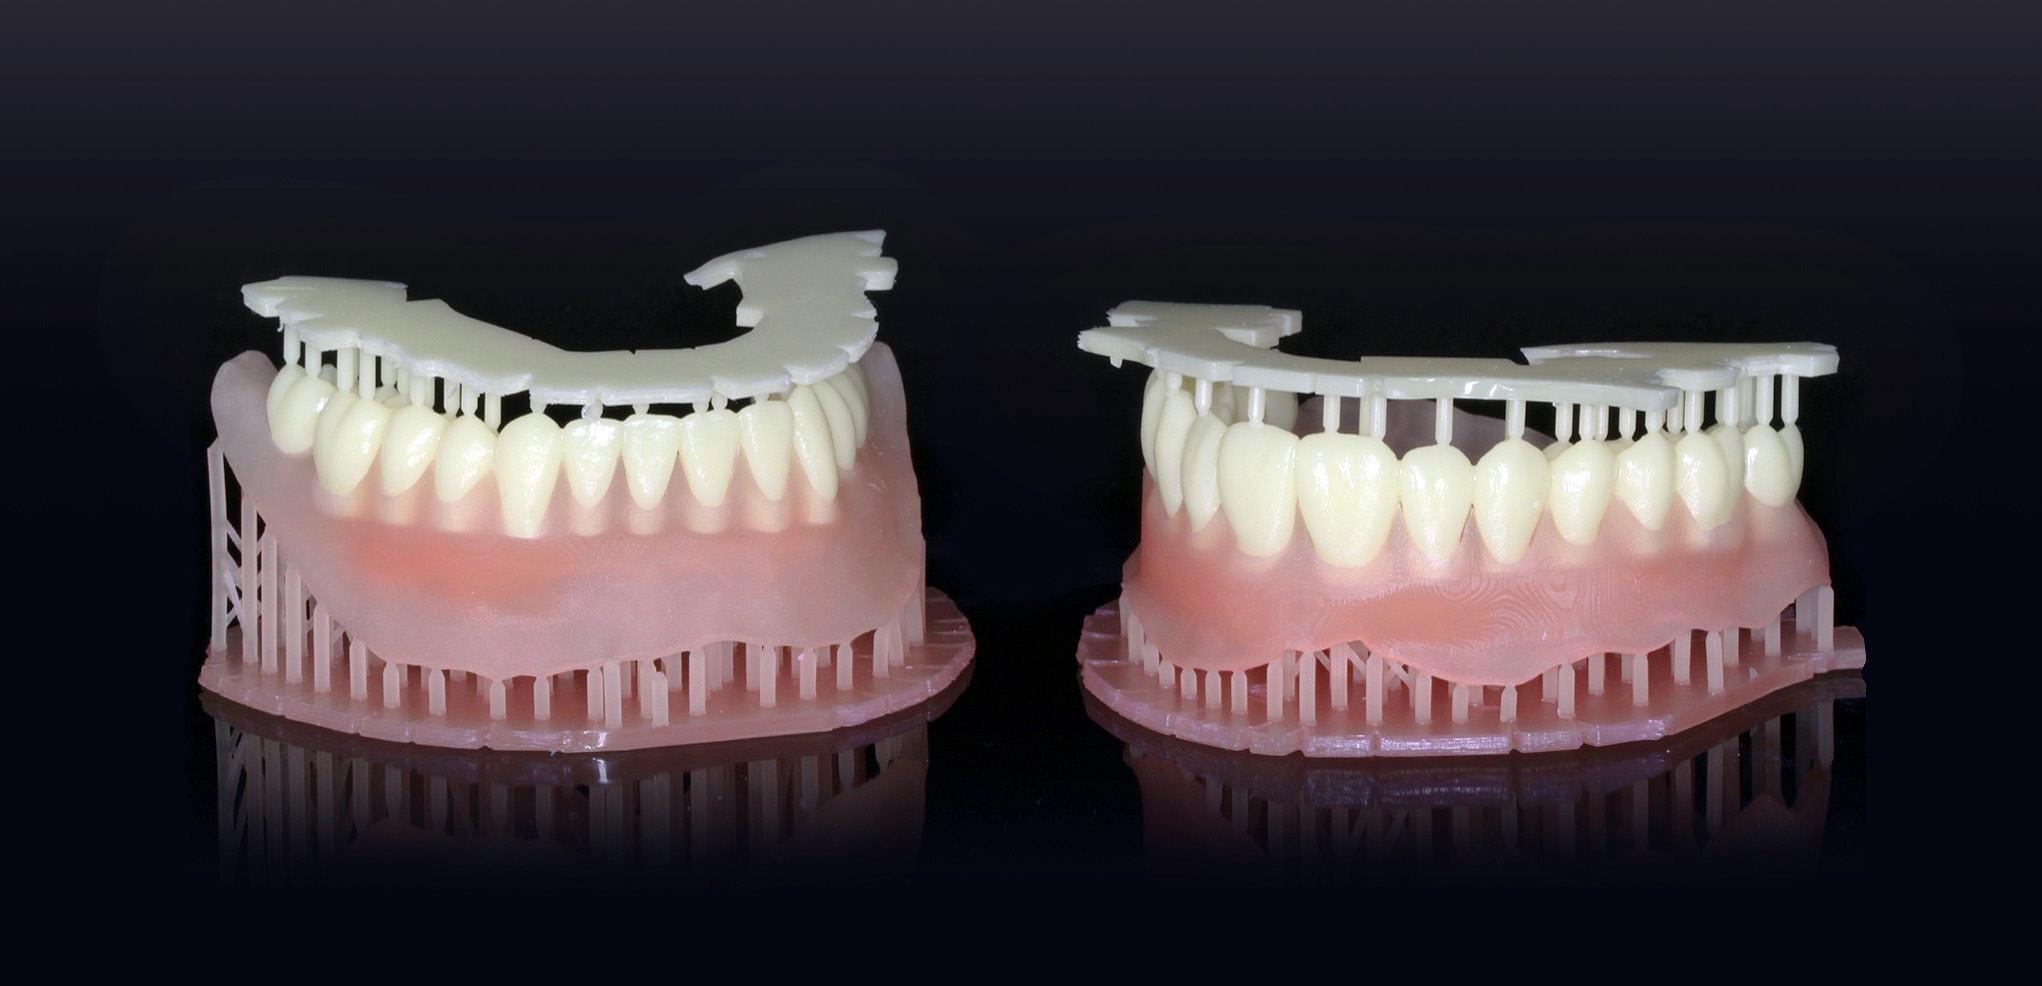 rapidcart dental